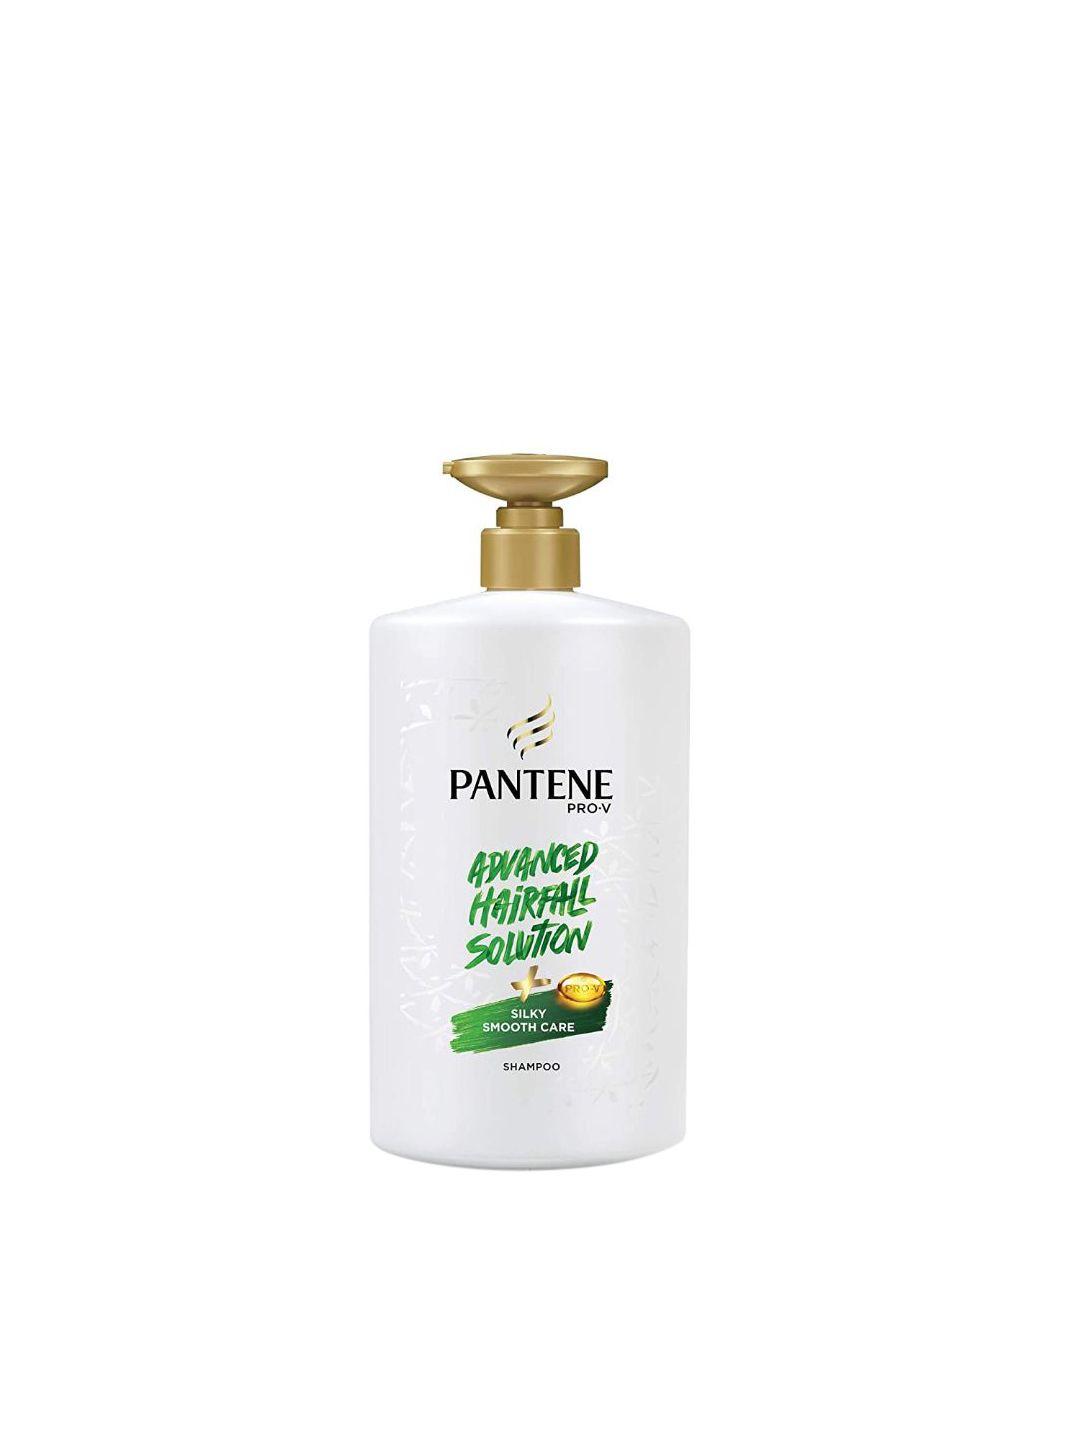 Pantene Unisex Pro V Advanced Hairfall Solution + Silky Smooth Care Shampoo 1 litre